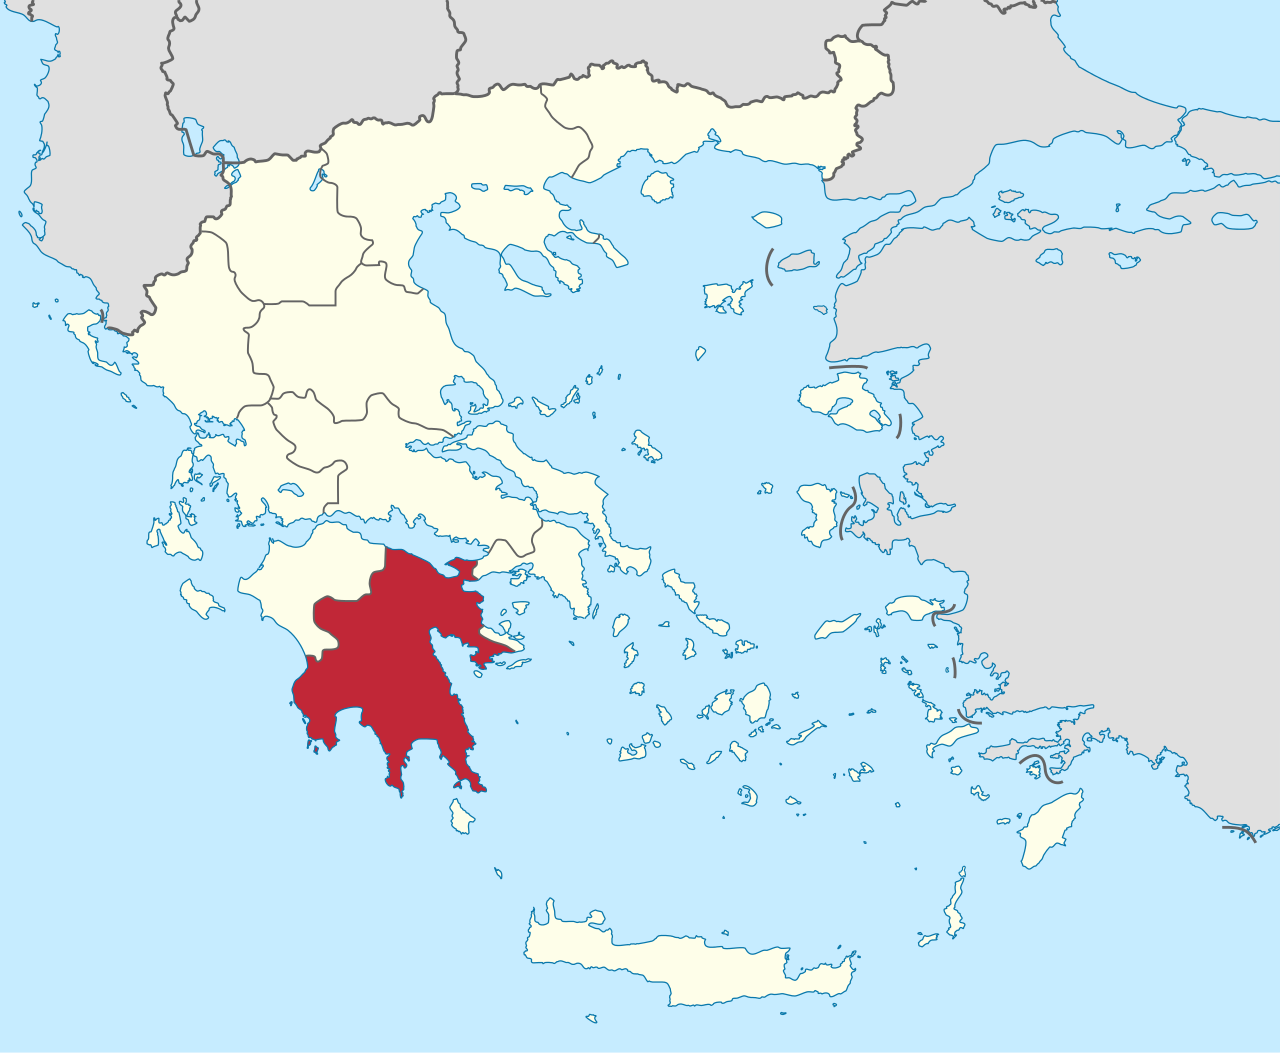 Blue Paradise Urbex location or around the region Peloponnese Region, Greece